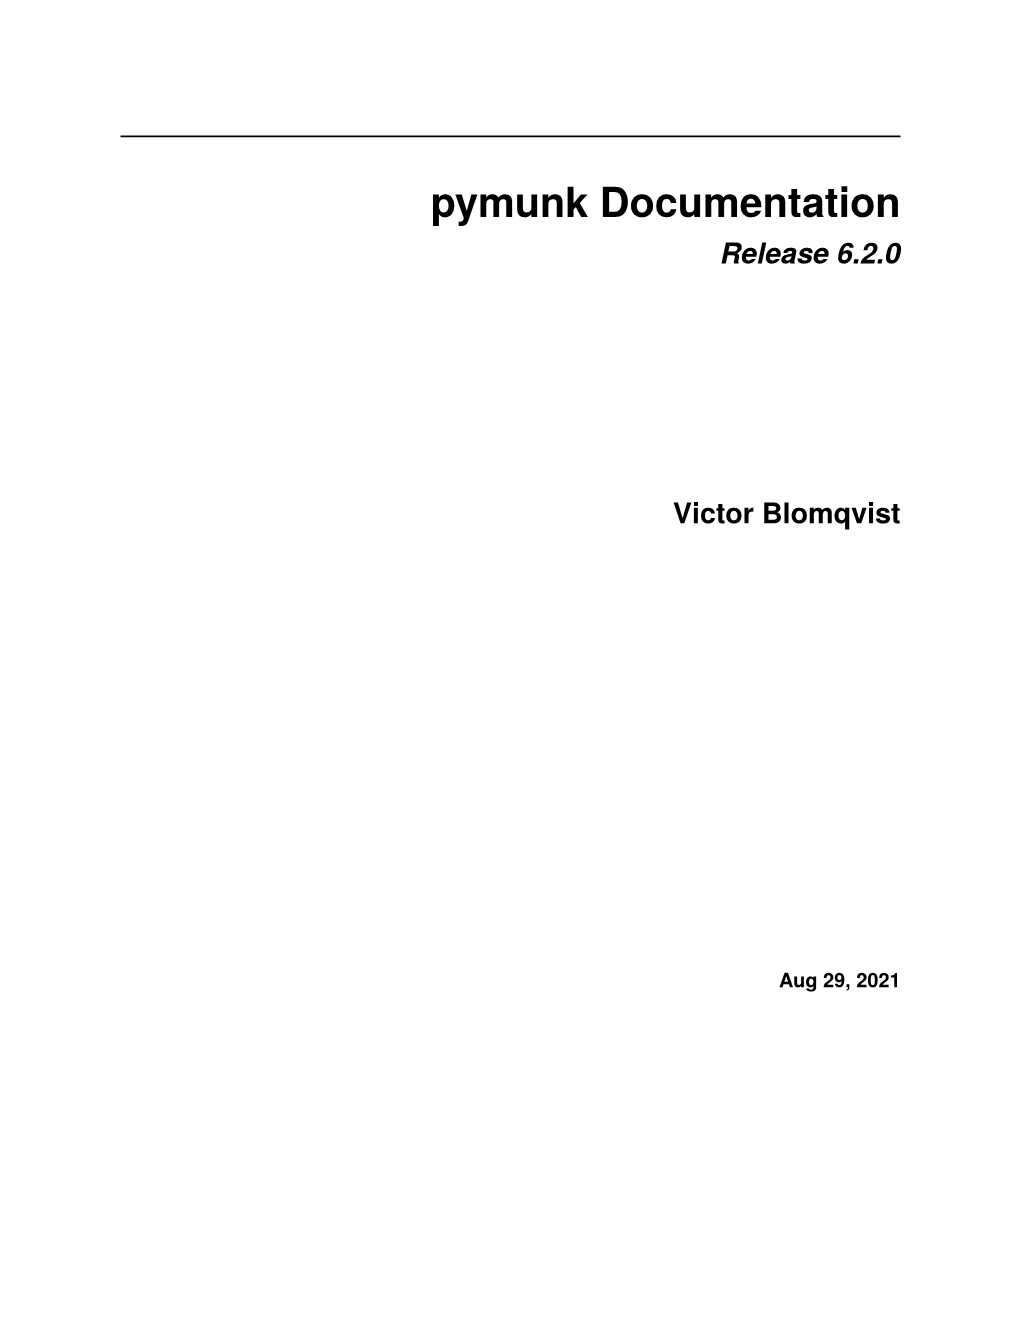 Pymunk Documentation Release 6.2.0